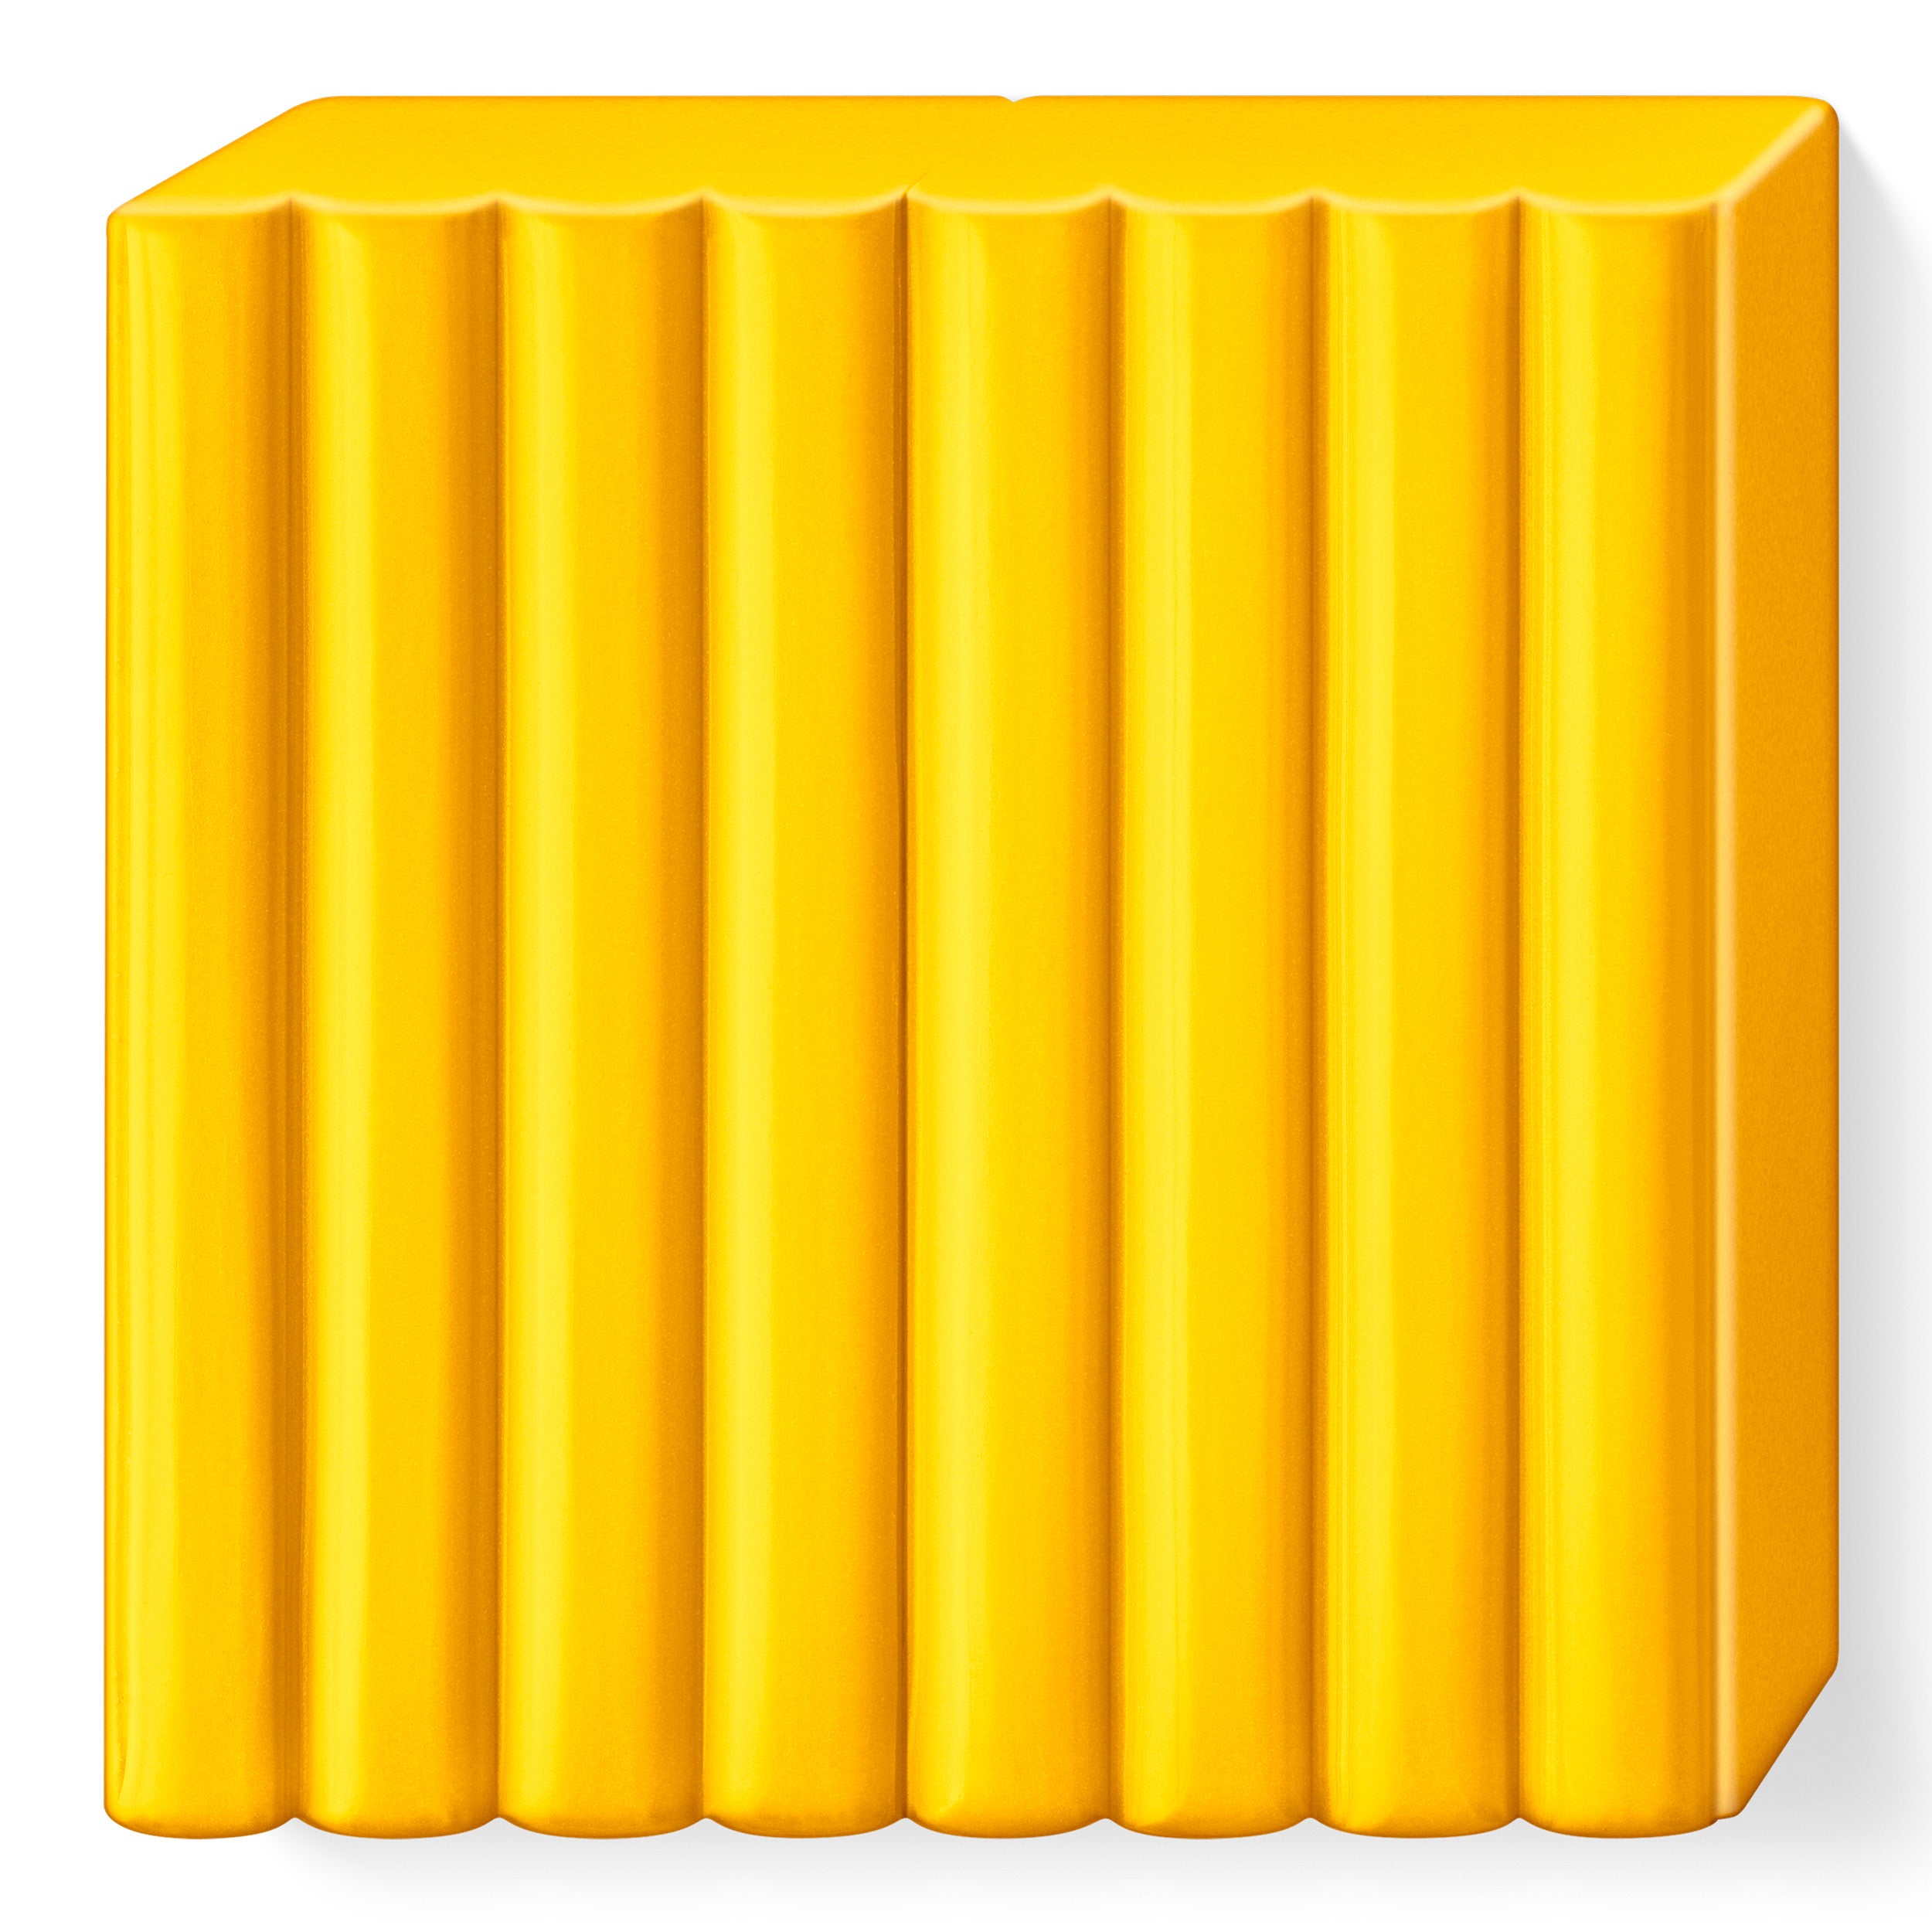 Fimo Soft Polymer Clay Standard Block 57g (2oz) - Sunflower